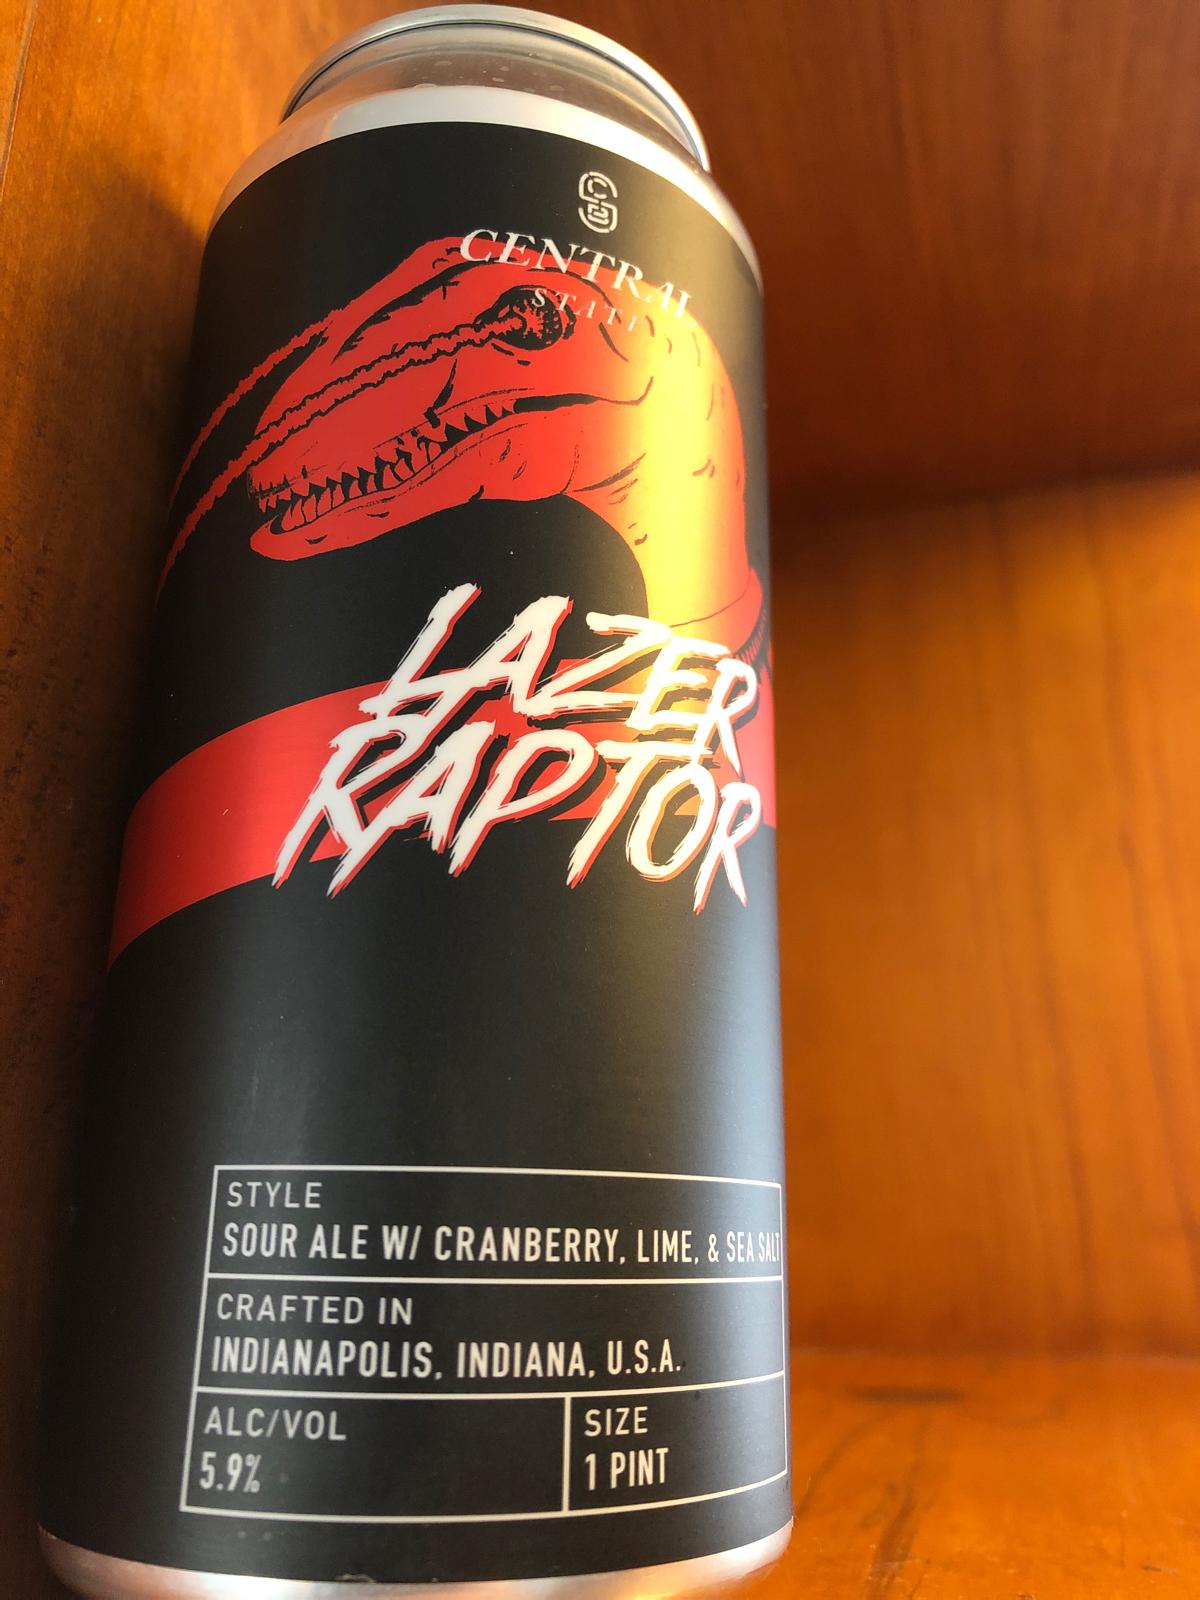 Lazer Raptor